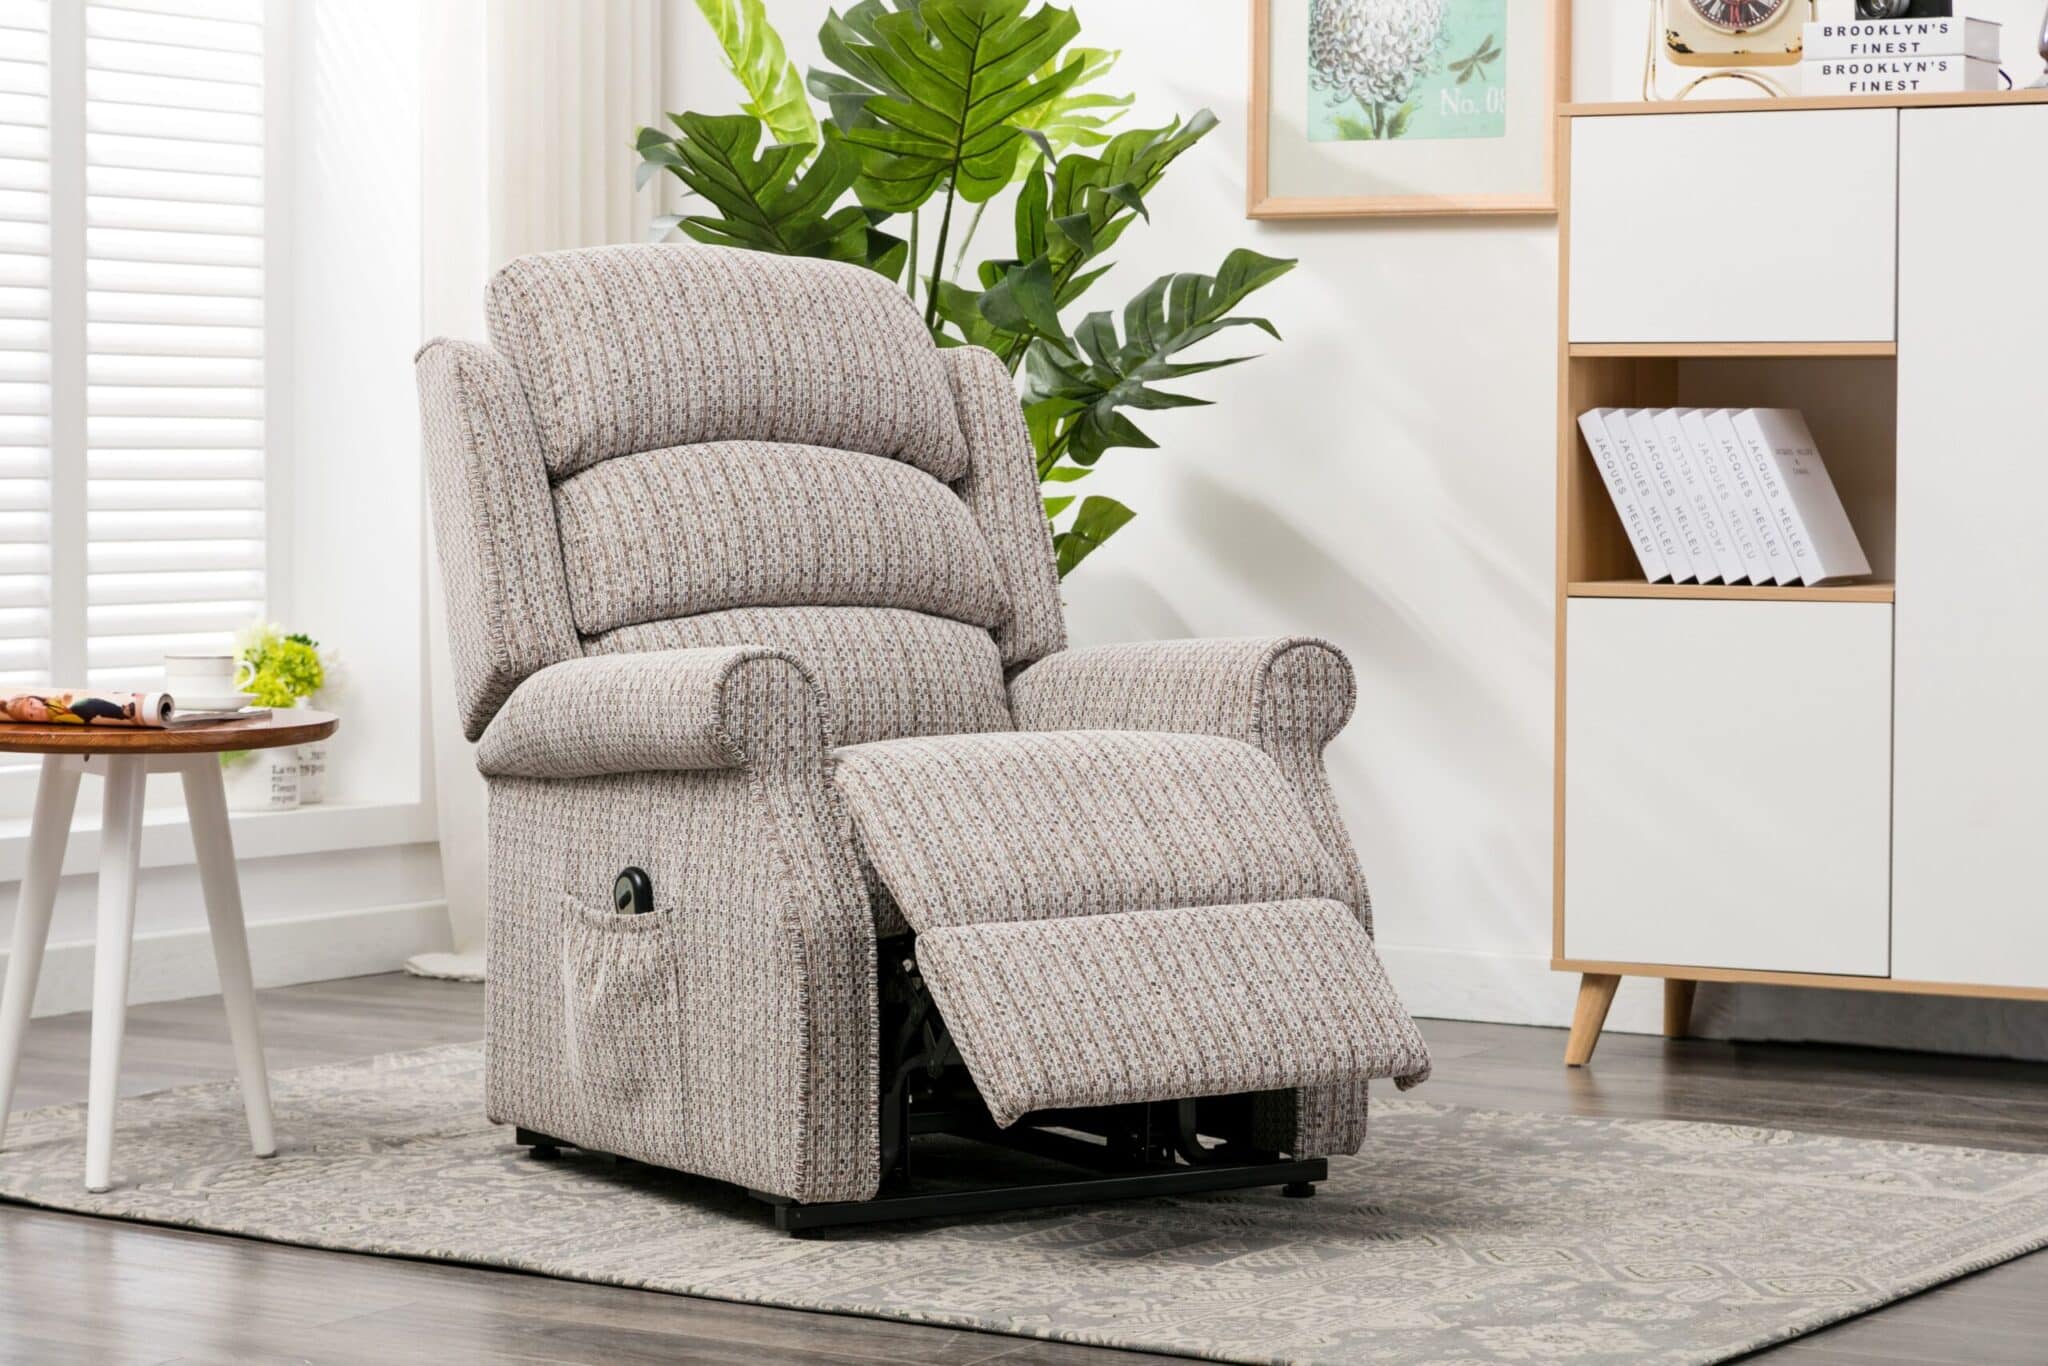 Trio Furnishings | riser recliner chair | Comfortable | affordable | dual motor | Telford | Shropshire